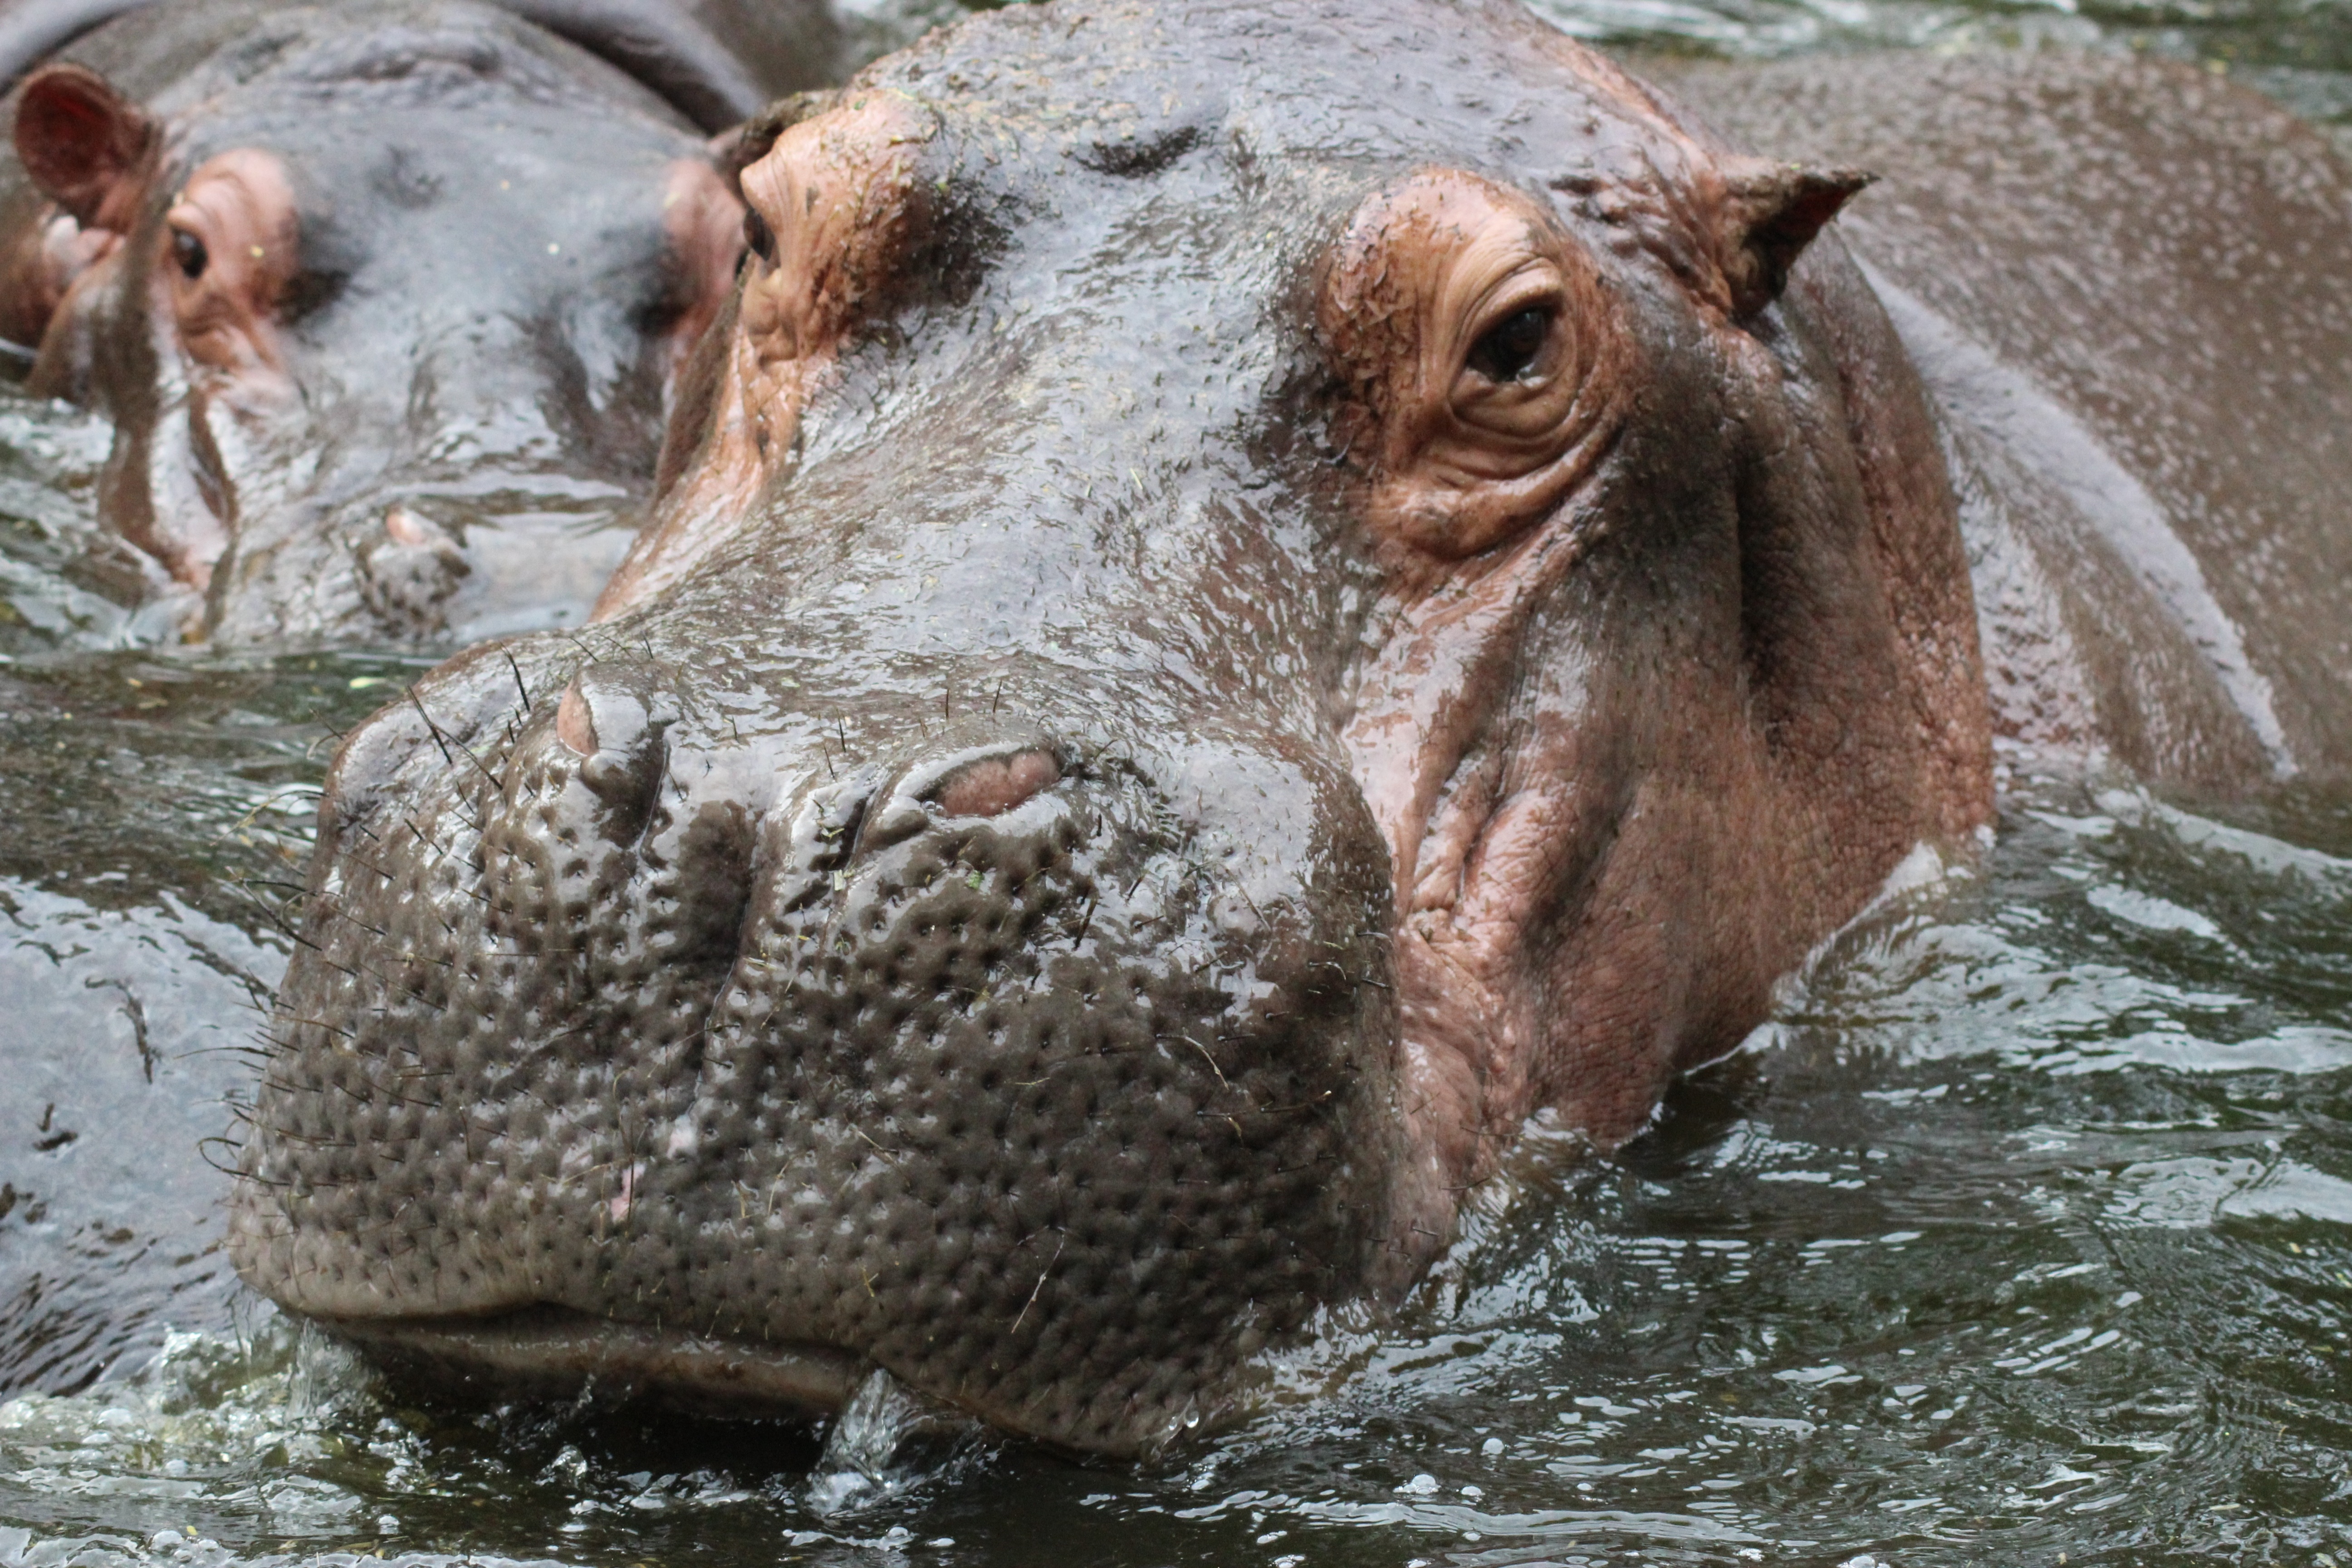 two brown hippopotamus in body of water during daytime